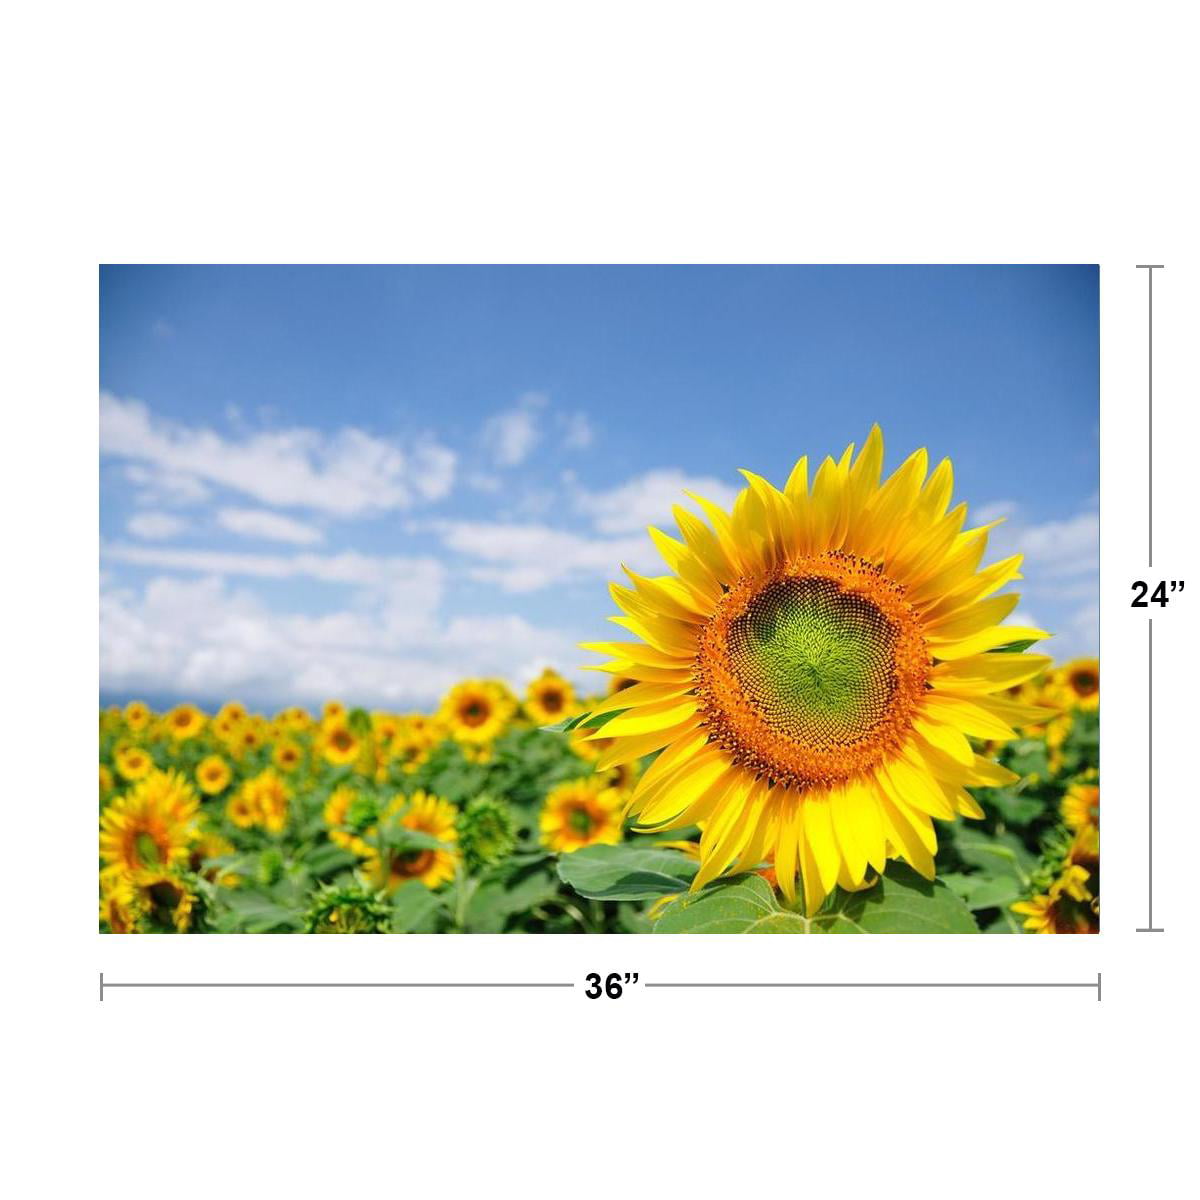 Sunflower Field Blue Sky Provence France Photo Art Print Poster 24x36 inch 